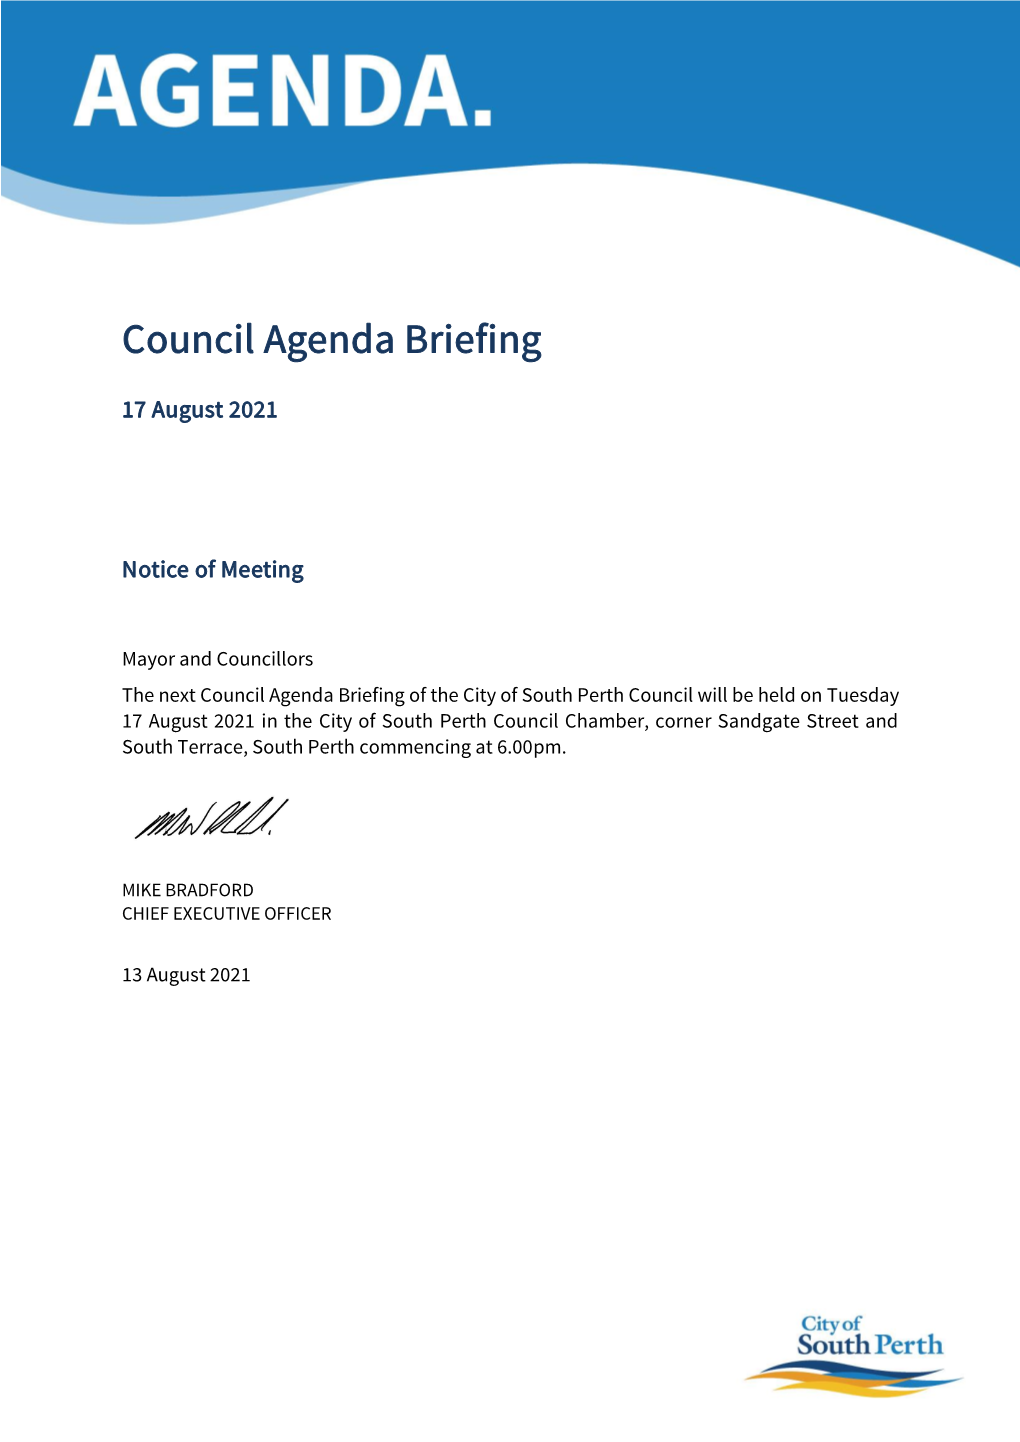 Agenda of Council Agenda Briefing